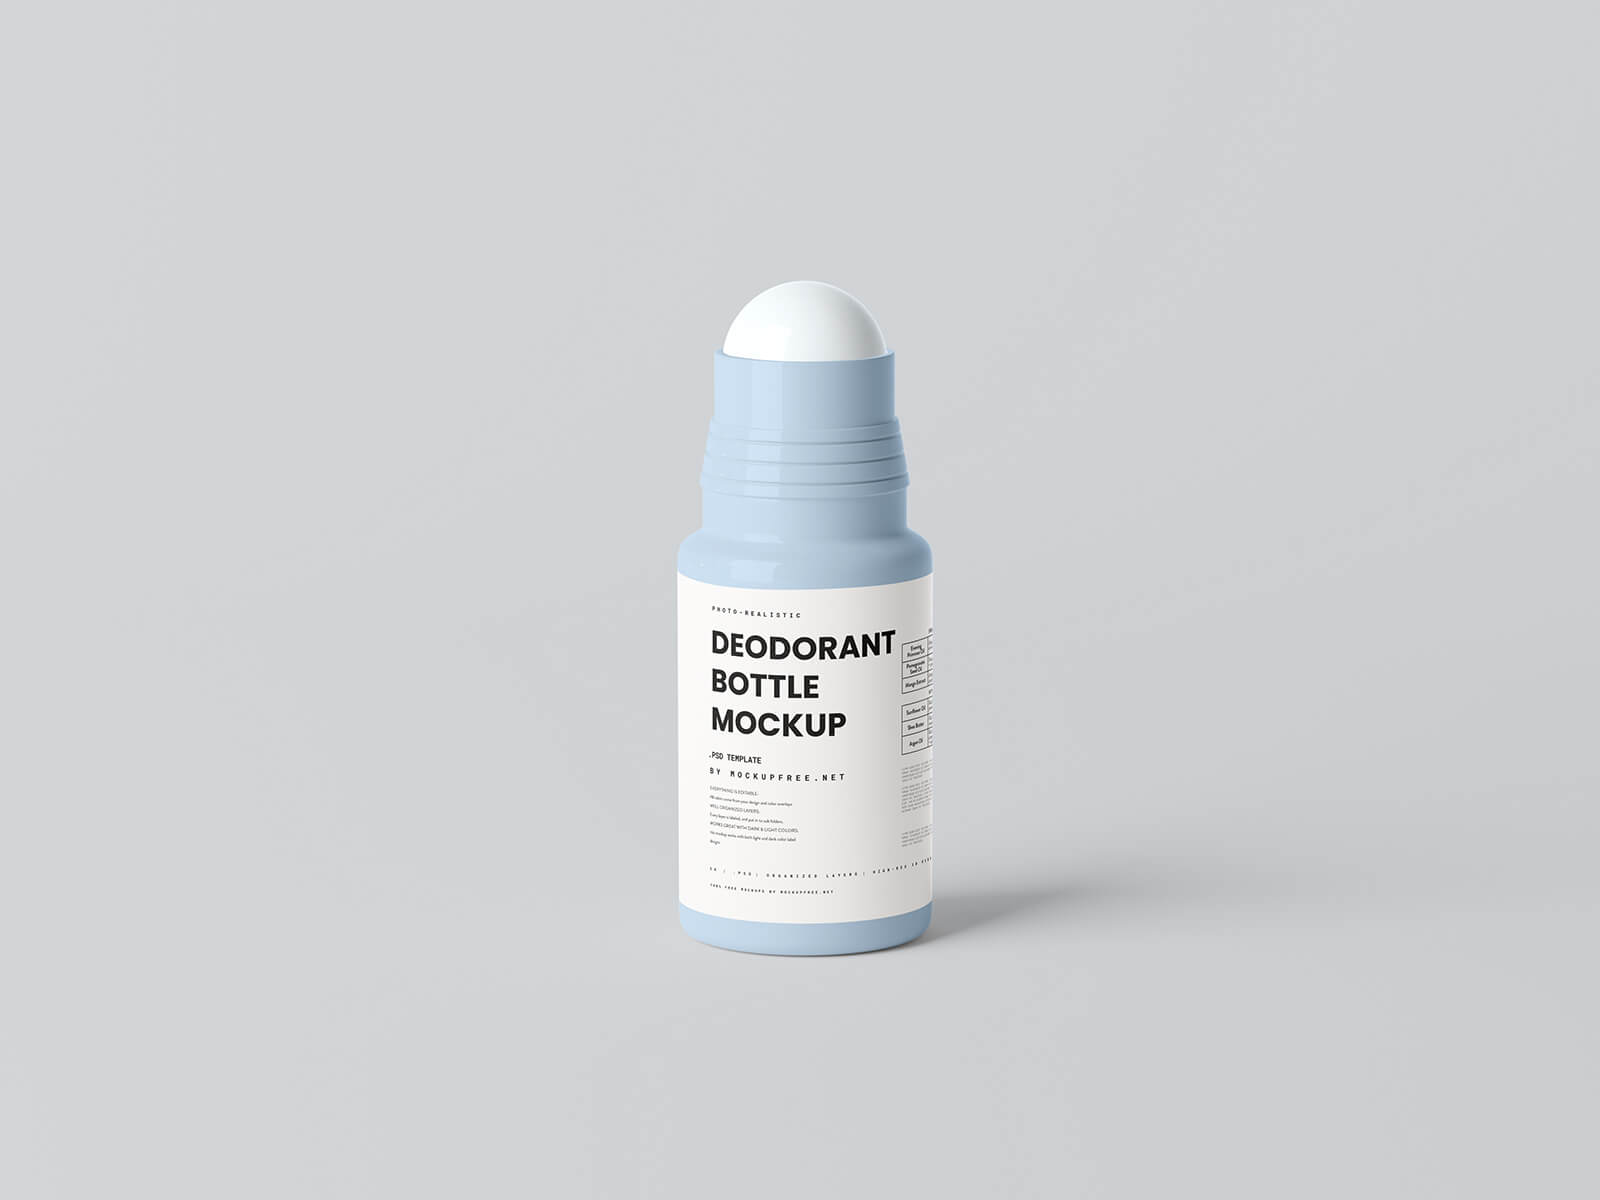 Free Deodorant Moisturizer Rolling Ball Bottle Mockup PSD